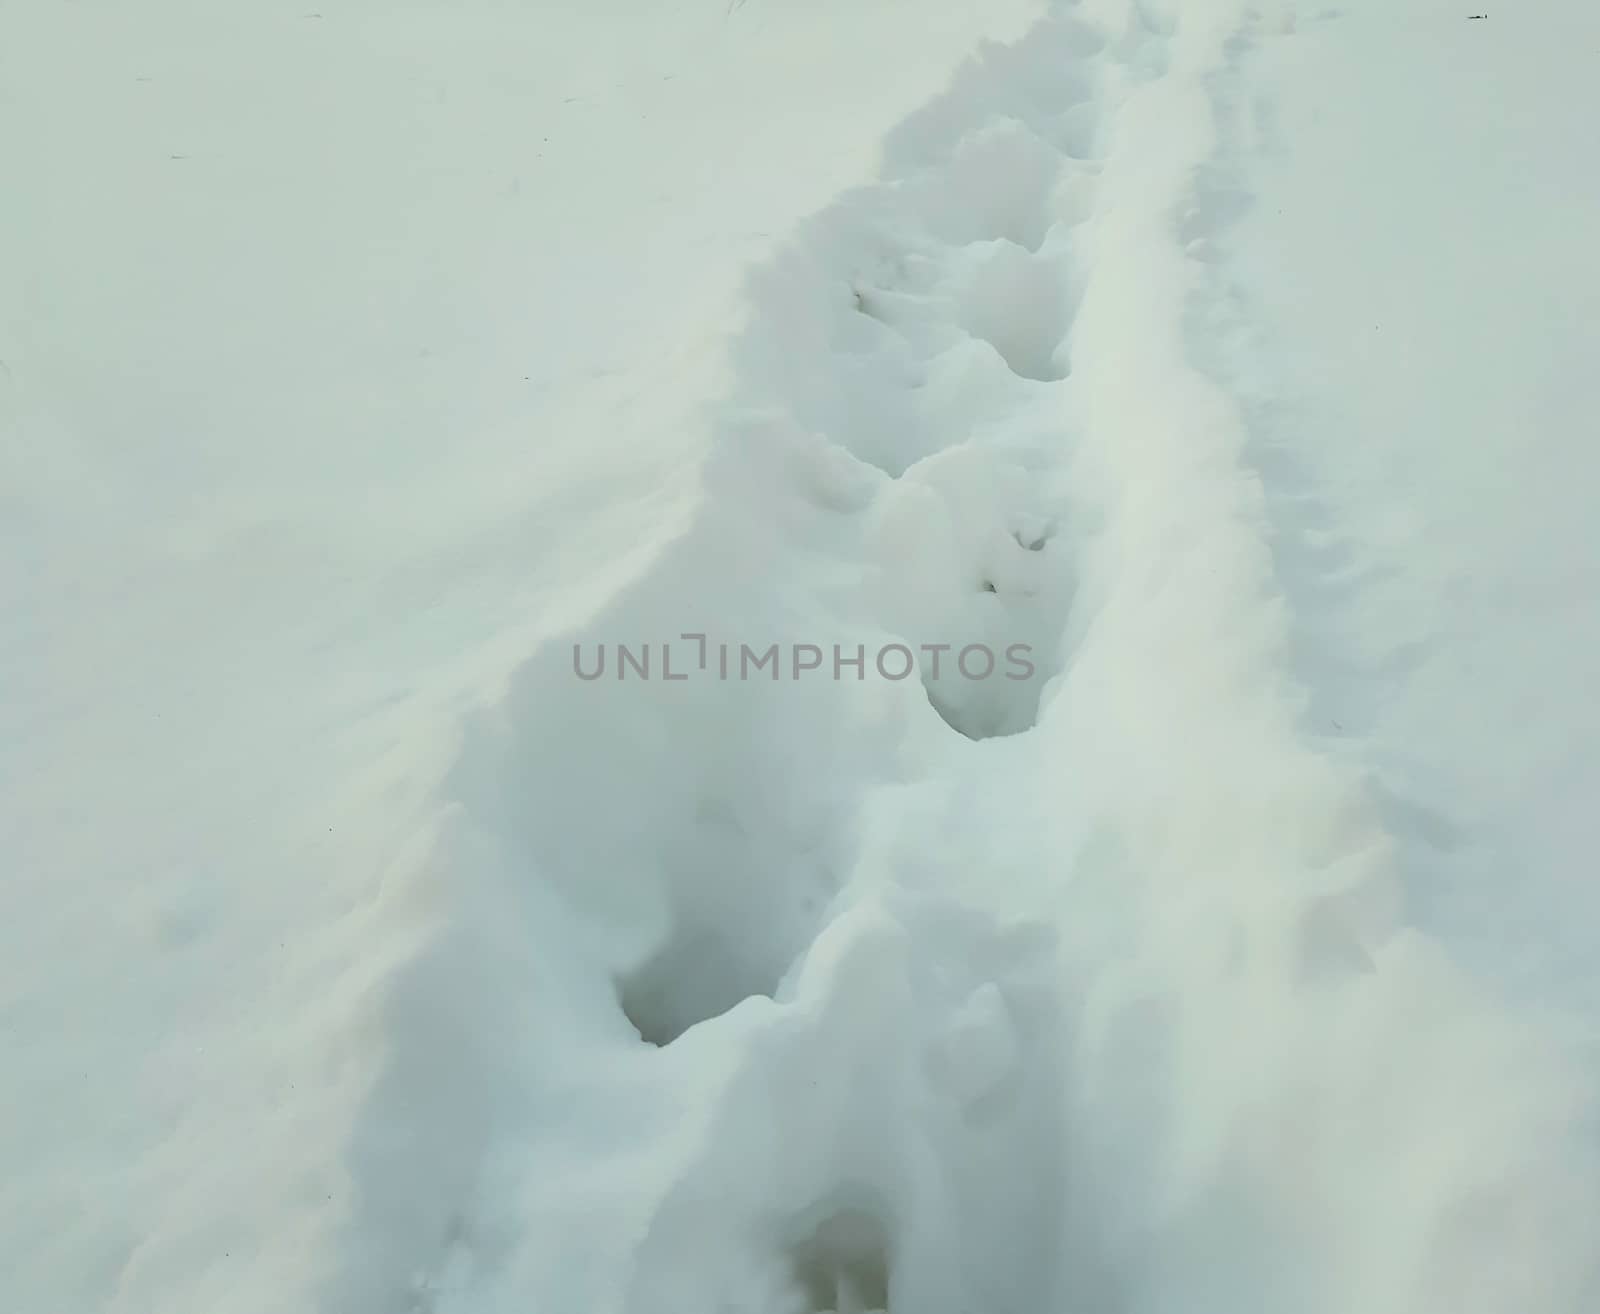 Deep Human footprints in the snow close up.